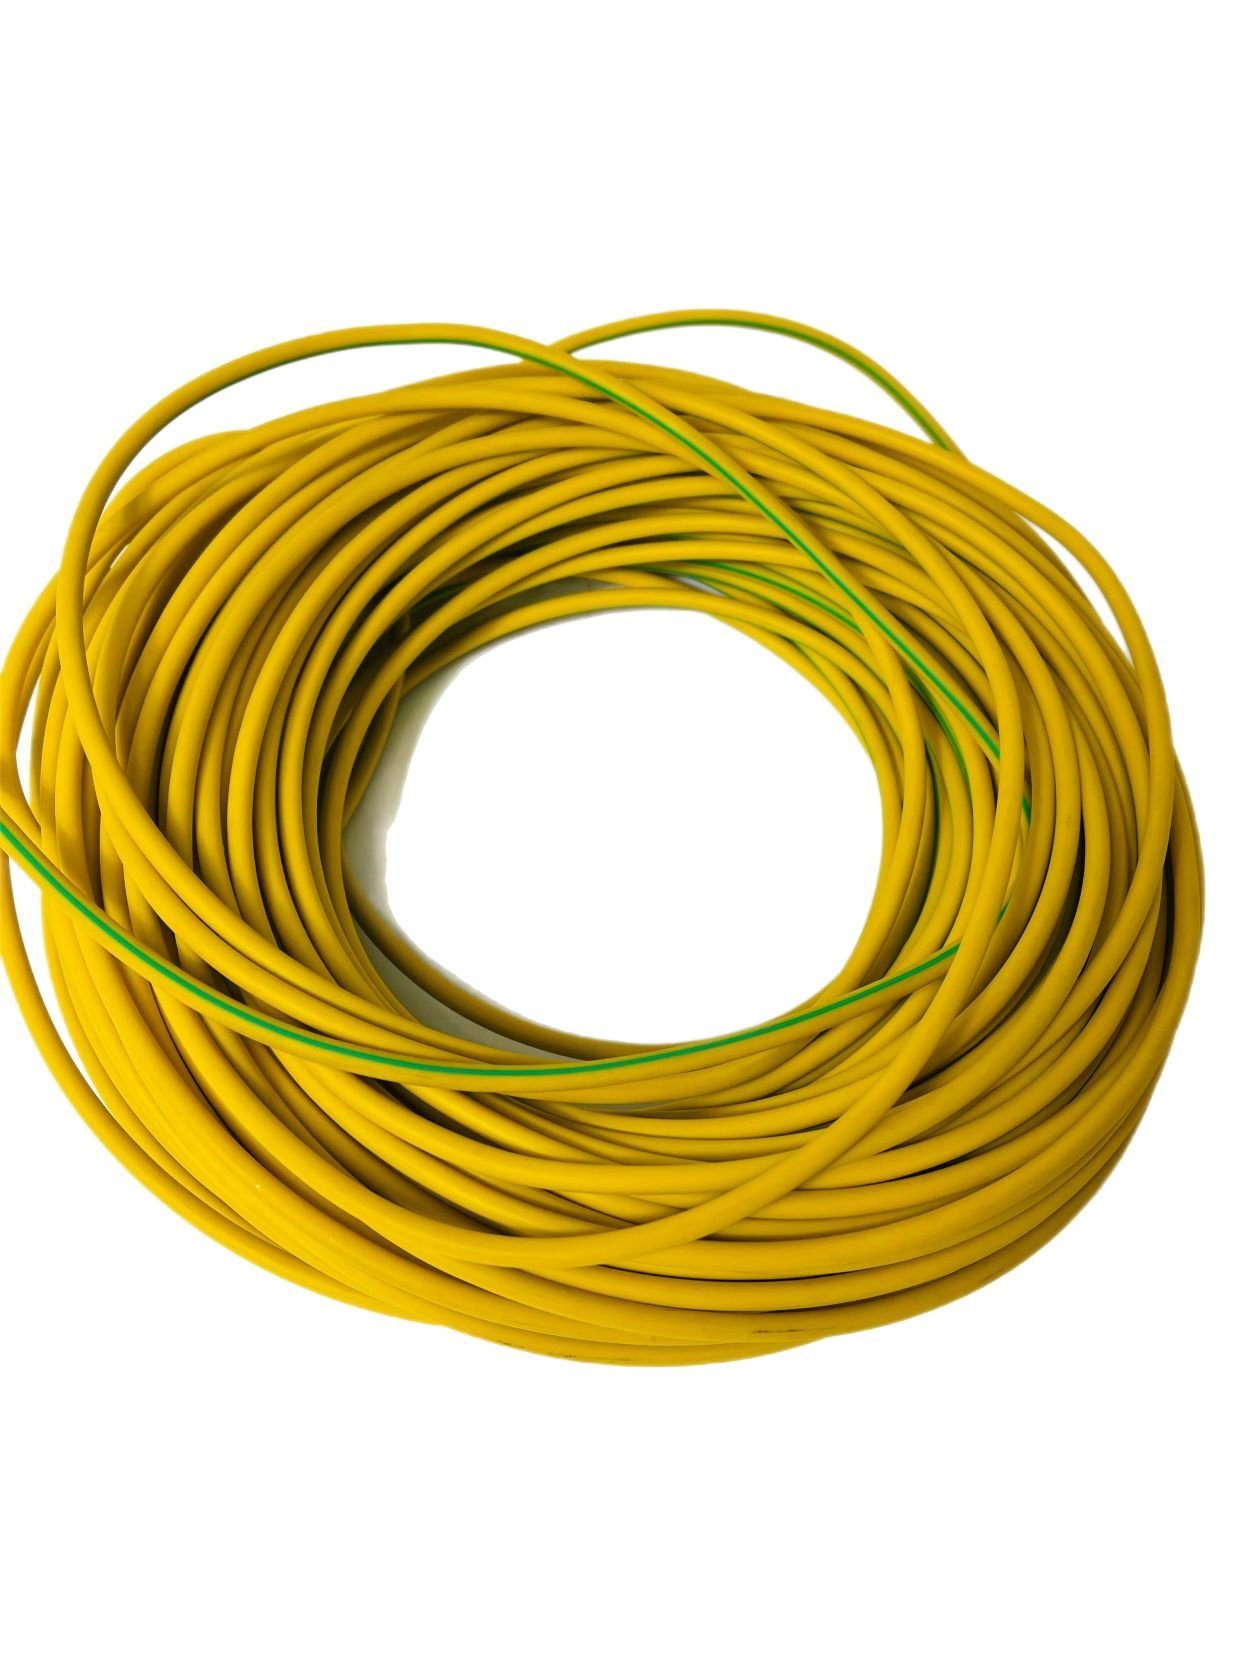 Stromkabel VaGo-Tools gelb-grün H07V-K, Batteriekabel H07V-K Stromkabel, 2m H07V-K 10mm²